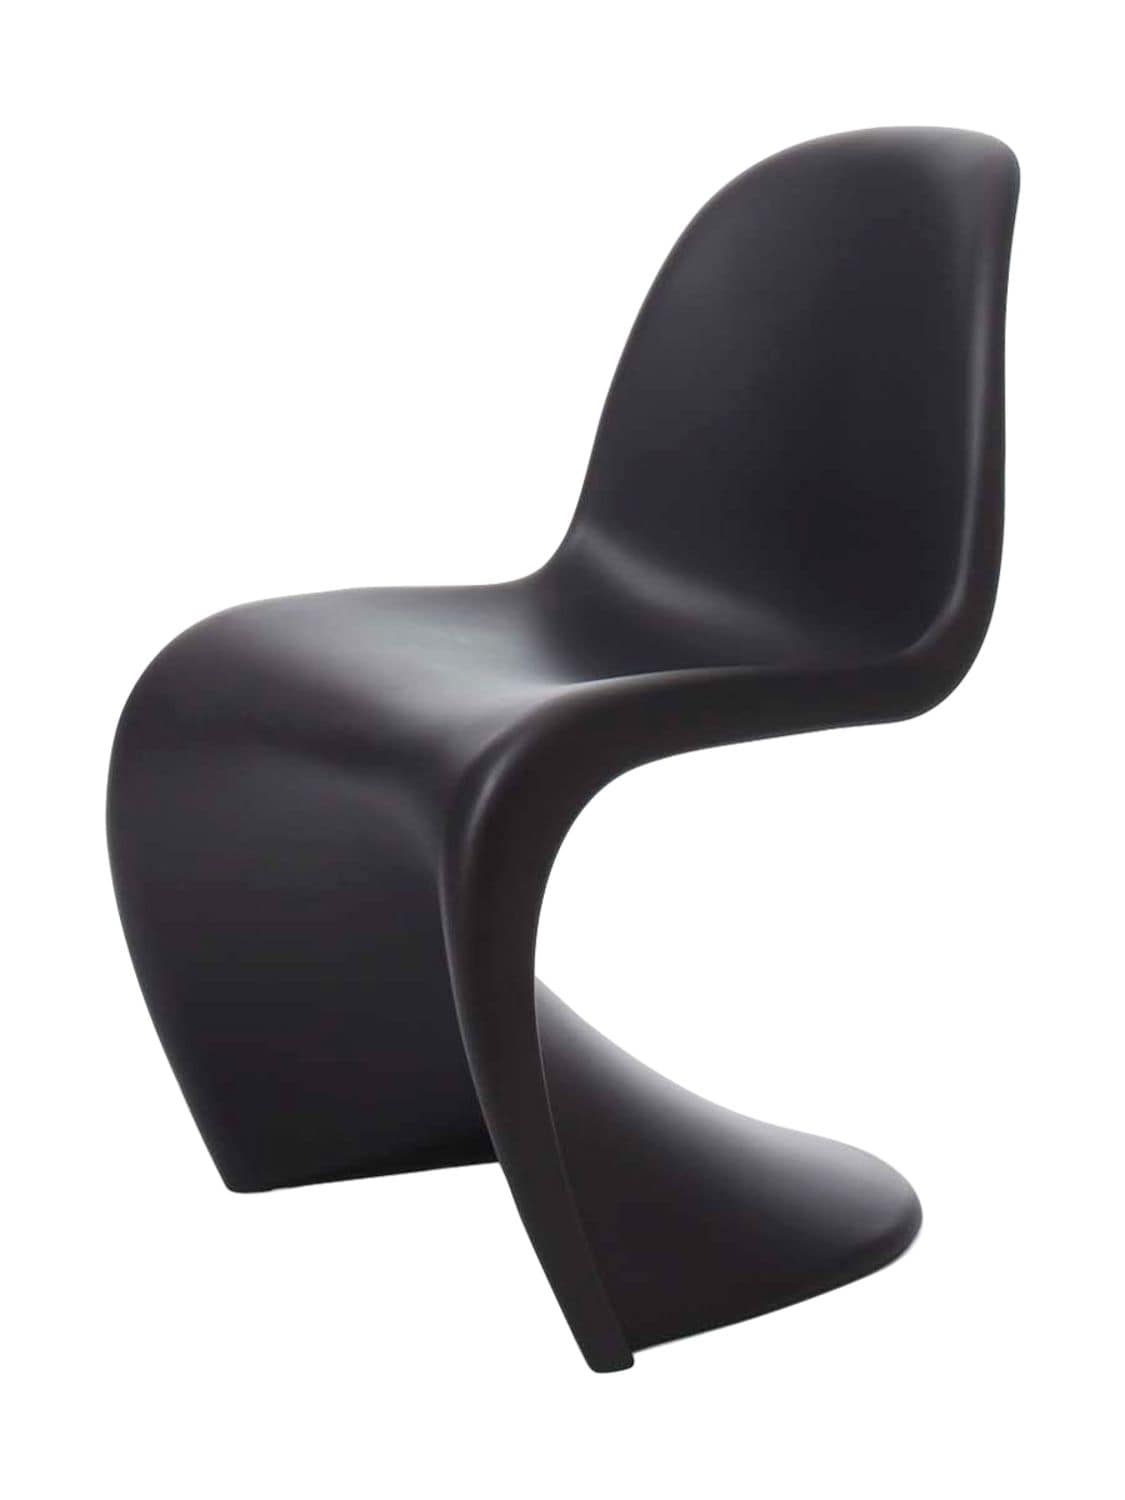 Vitra Trouseron Chair In Black